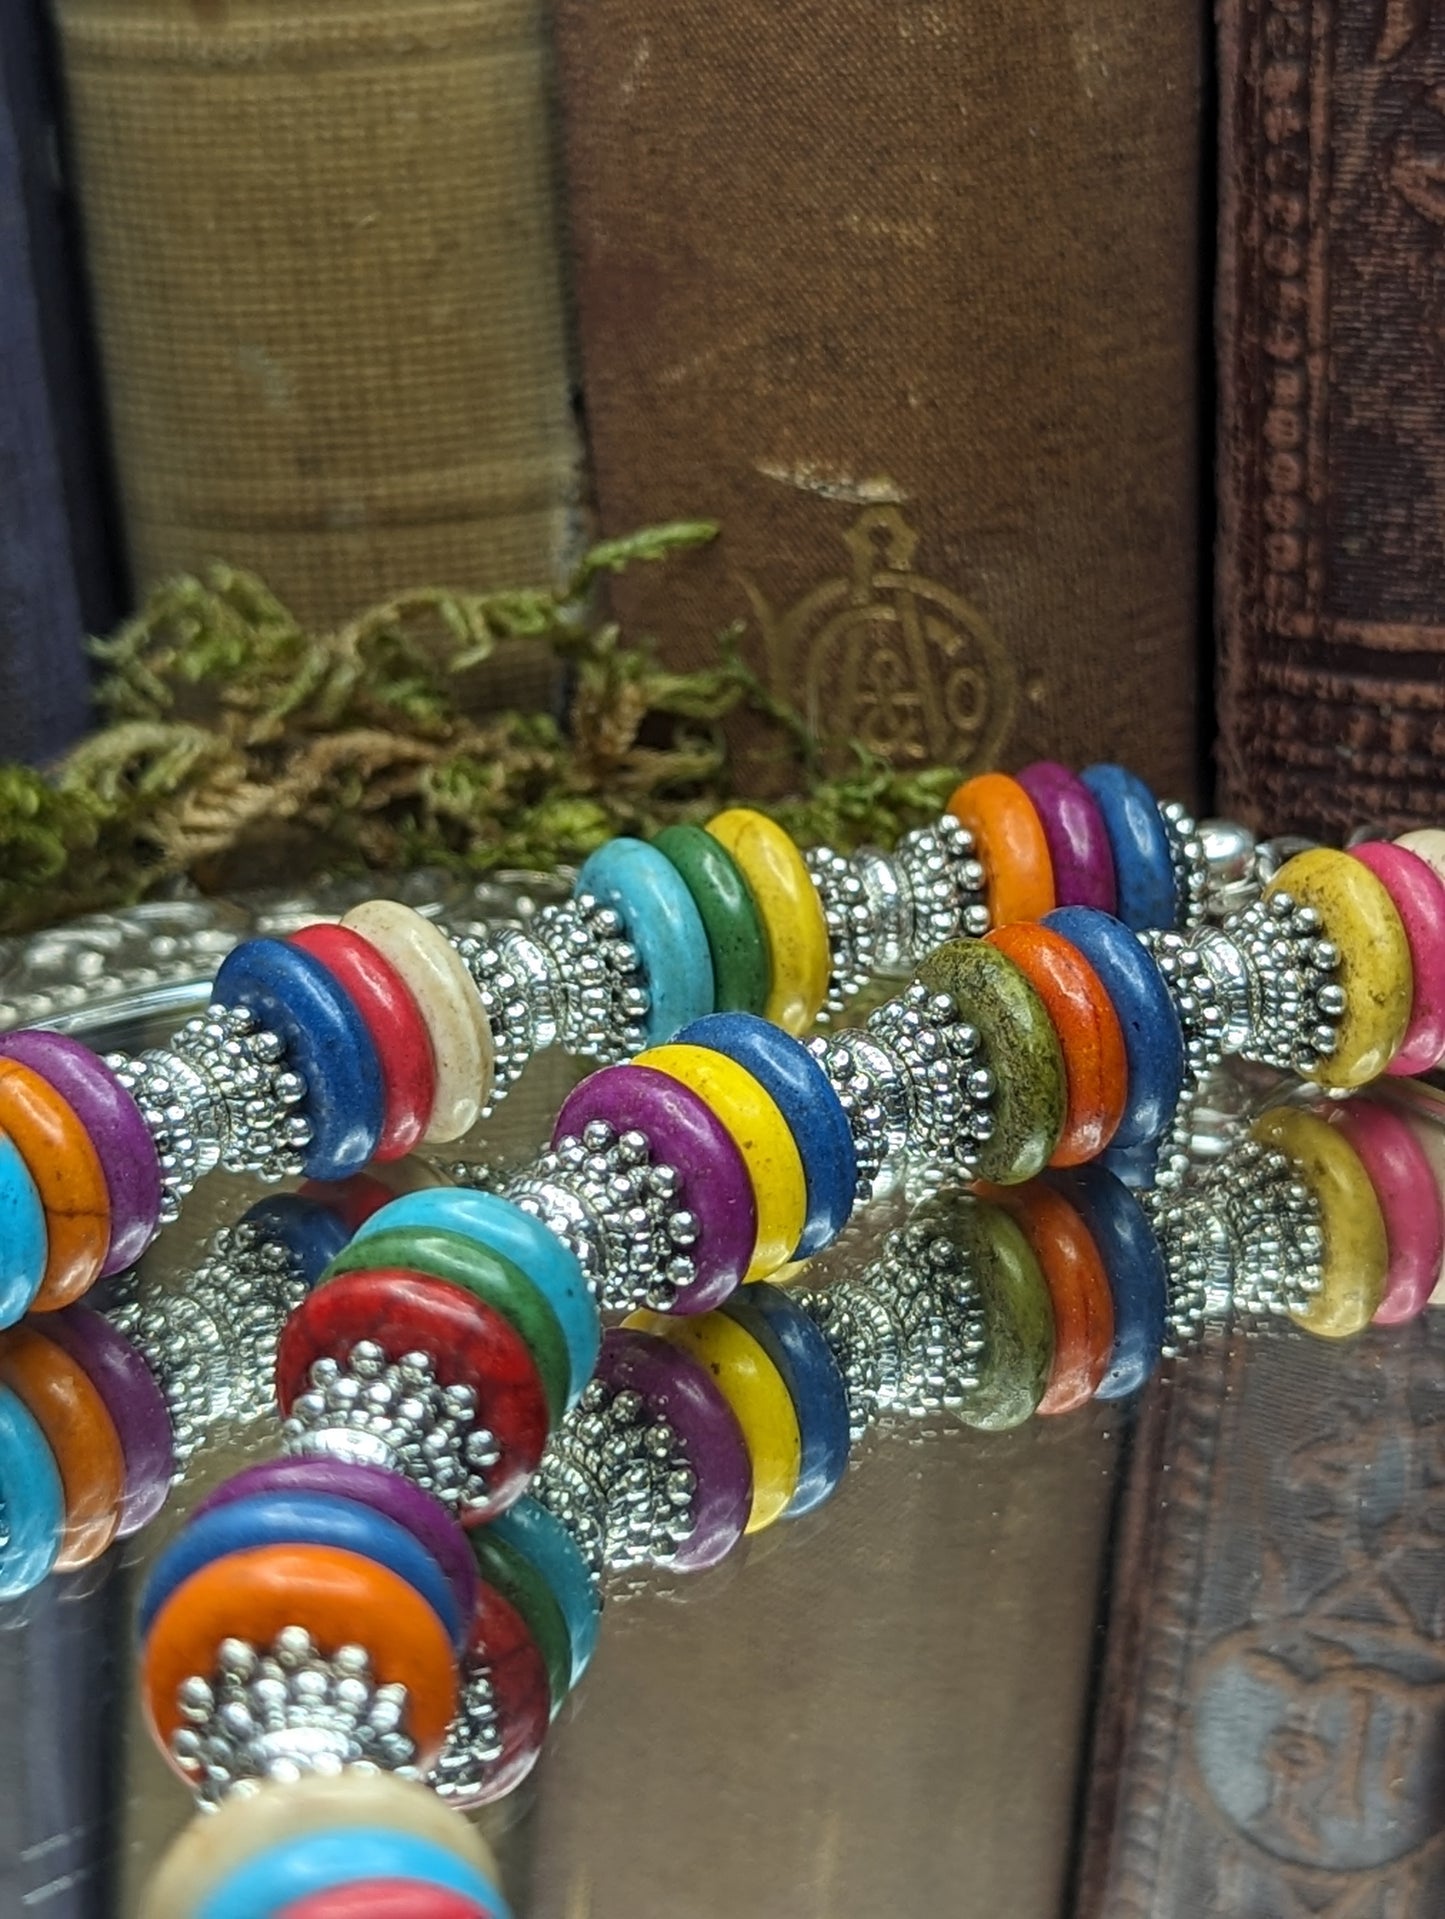 Iridian | Rainbow Howlite ✦ Necklace